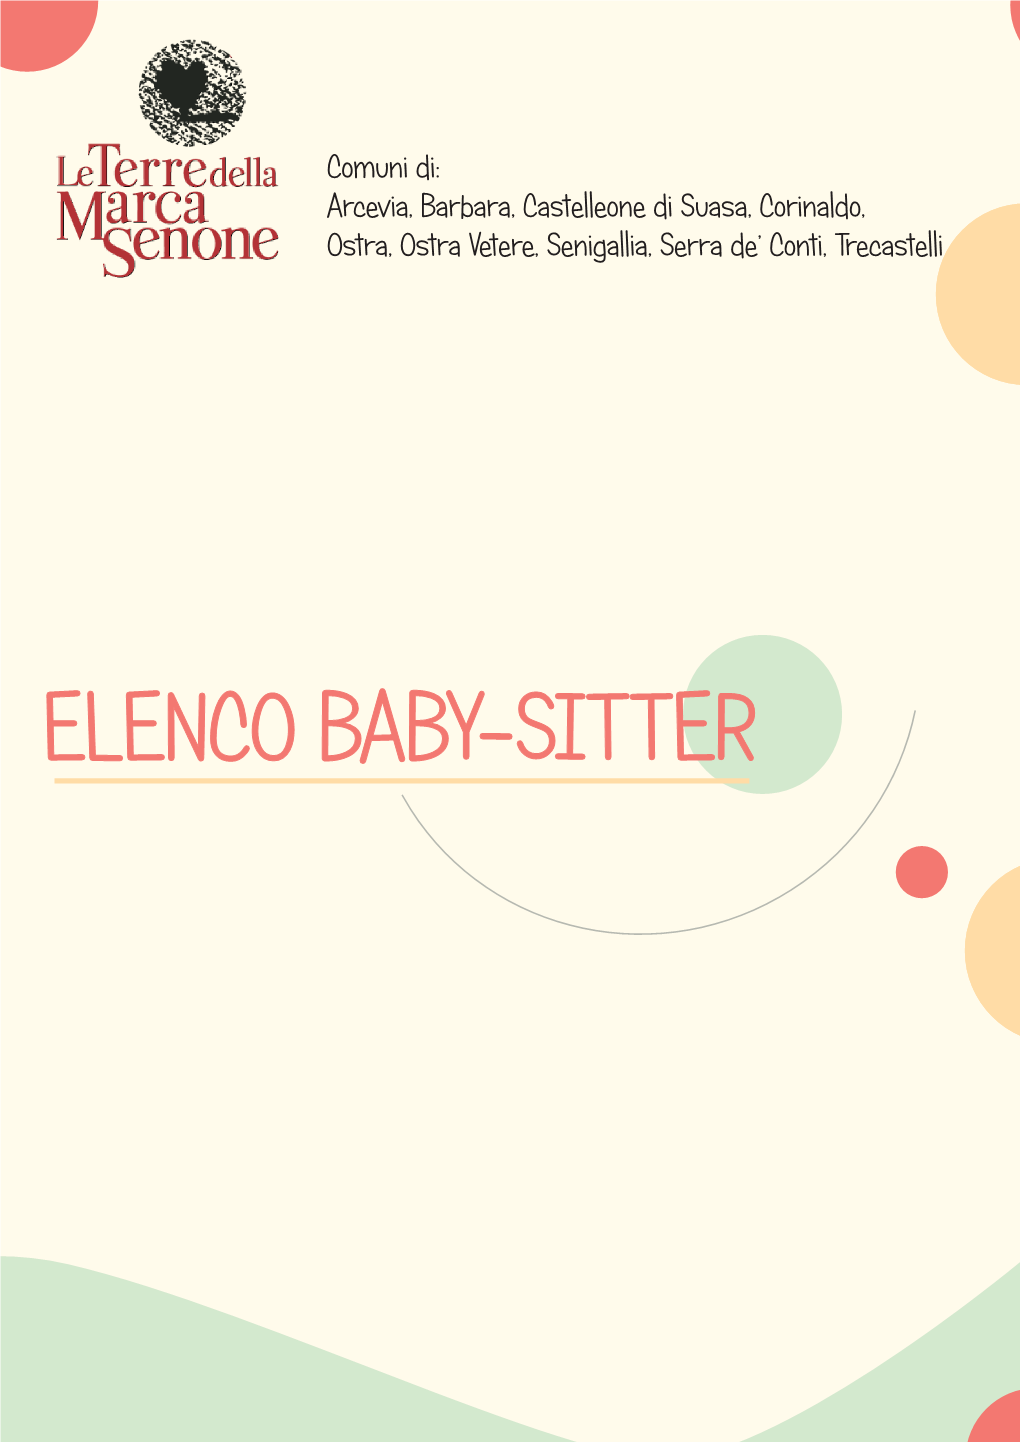 Elenco Baby Sitter 2020